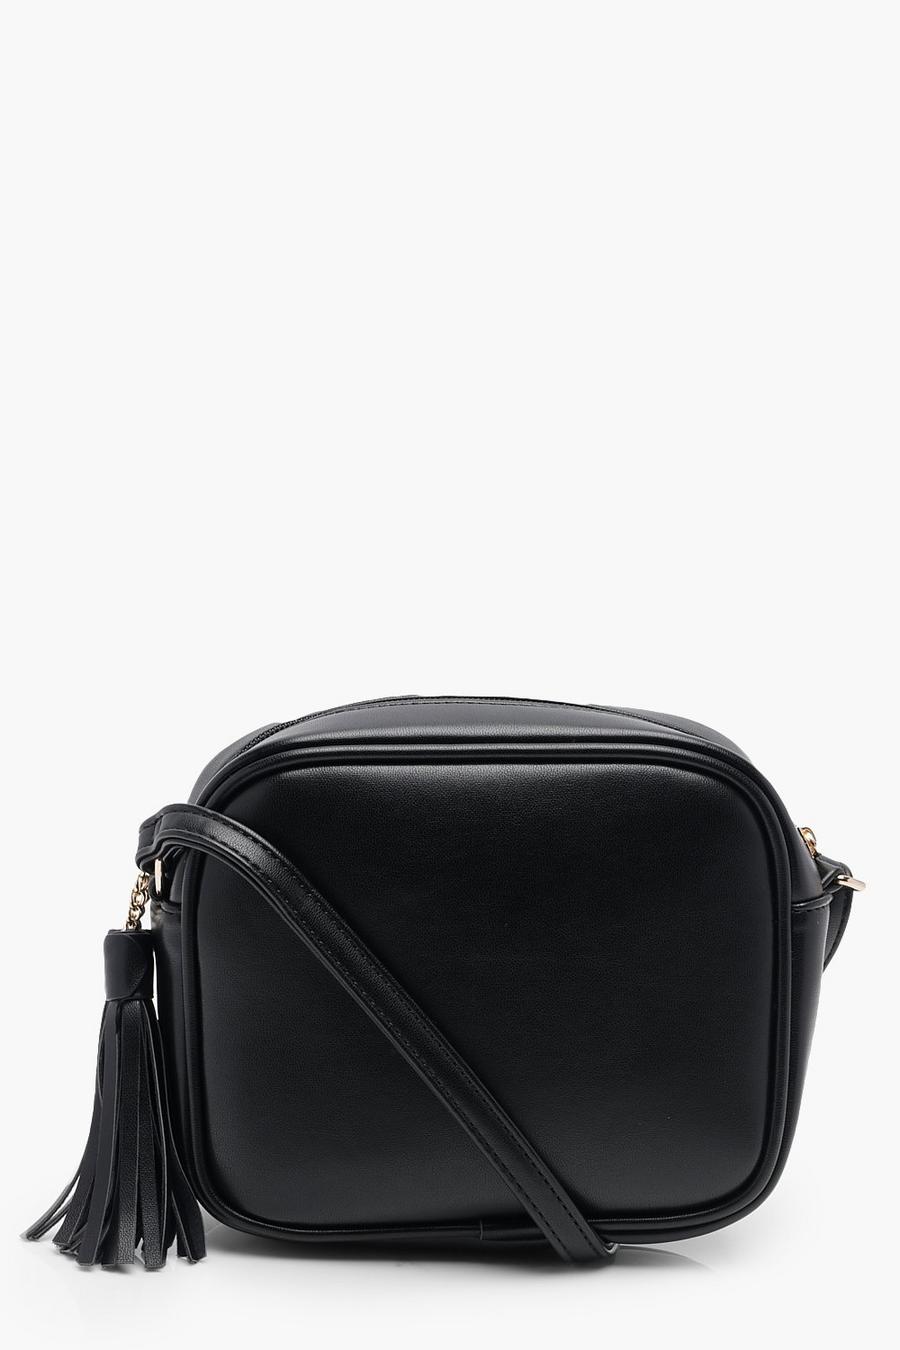 Black PU Zip Around Cross Body Bag With Tassel